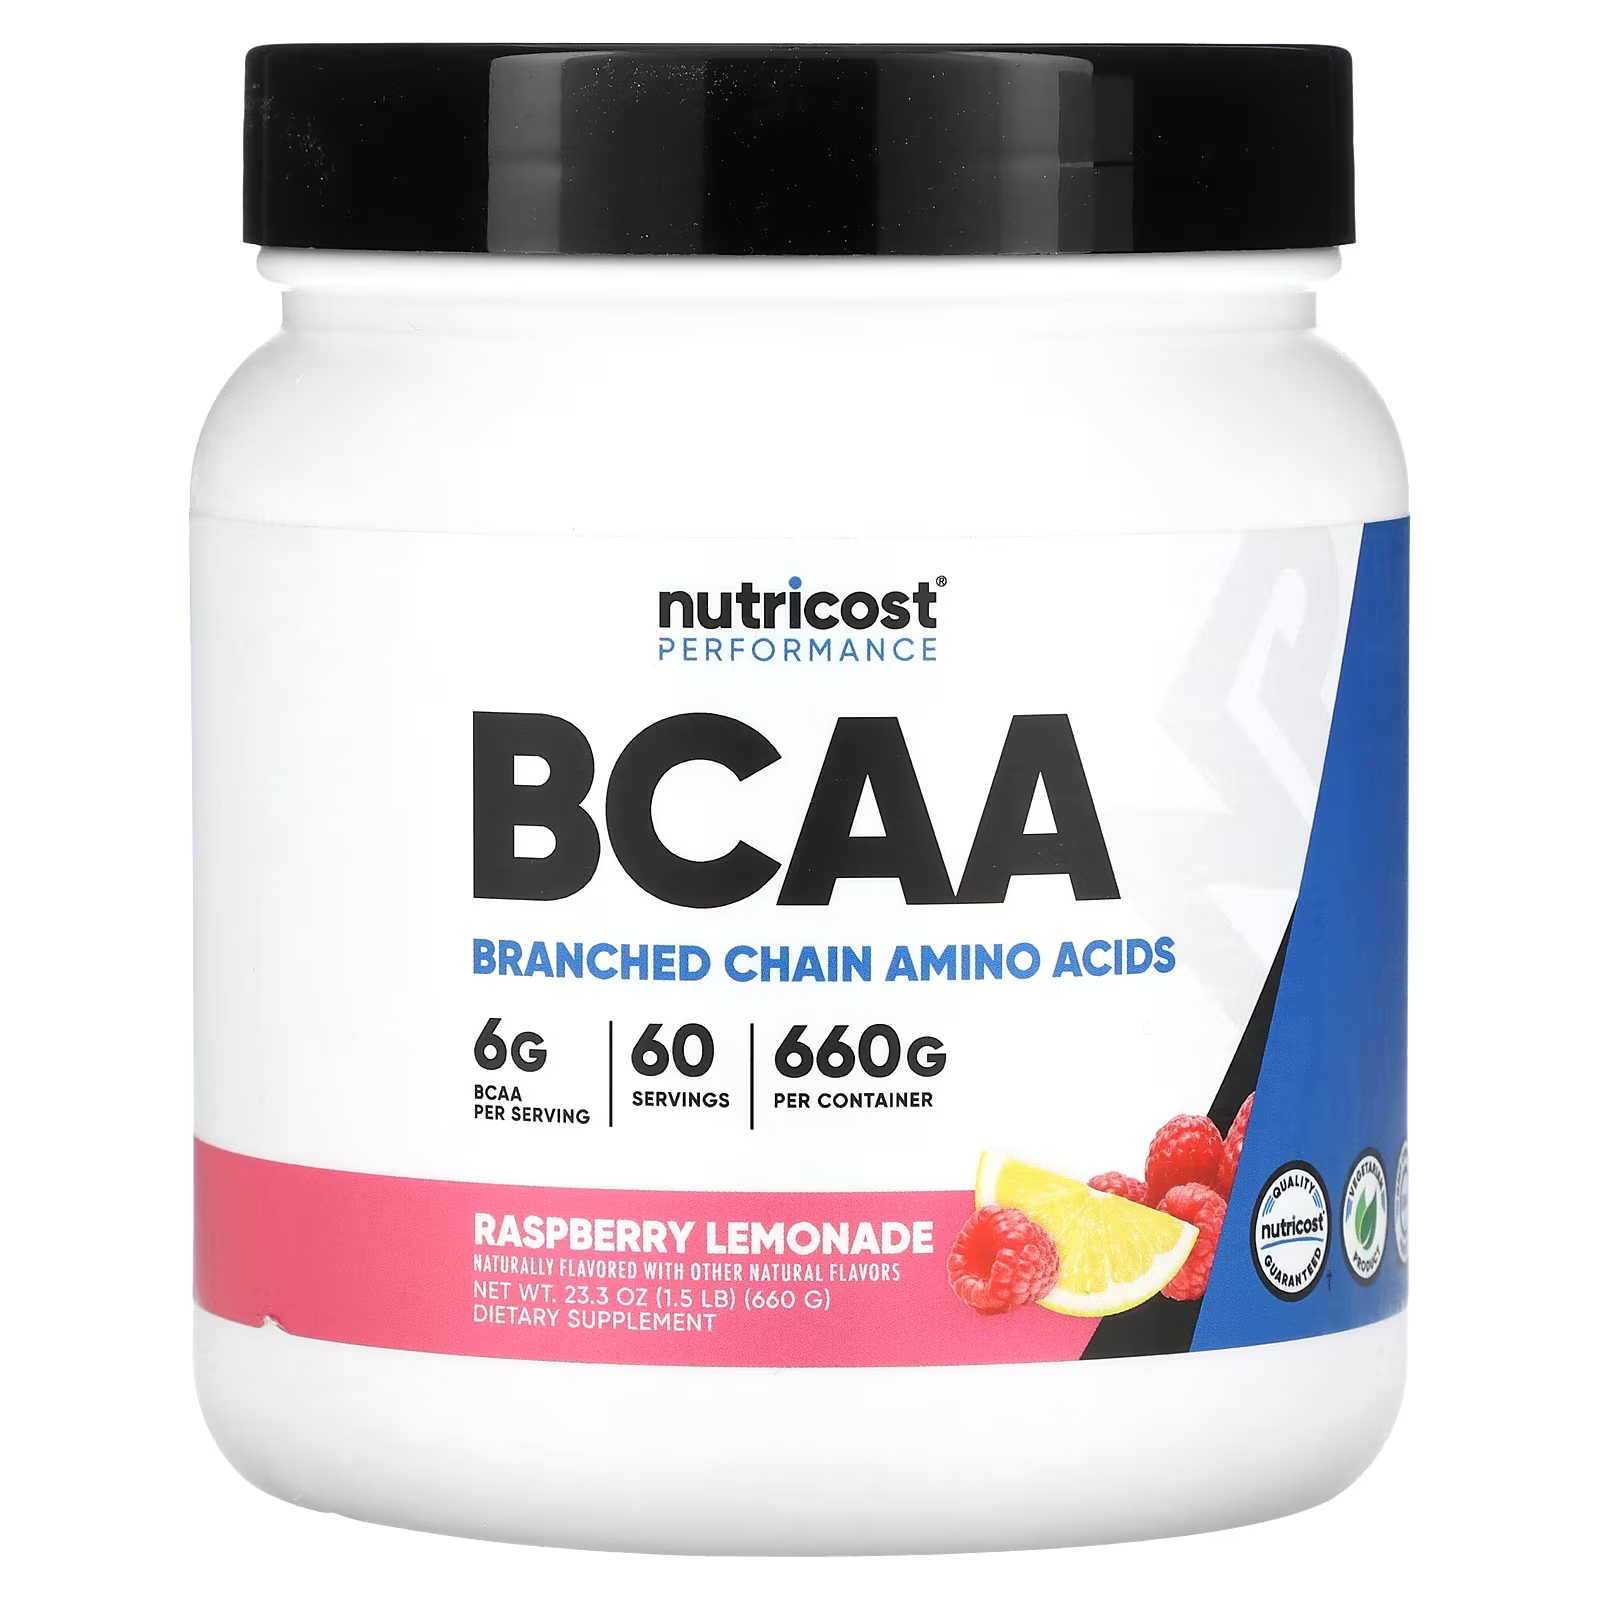 Пищевая добавка Nutricost Performance BCAA малиновый лимонад, 660 г pescience high volume добавка с оксидом азота без кофеина малиновый лимонад 252 г 8 9 унции